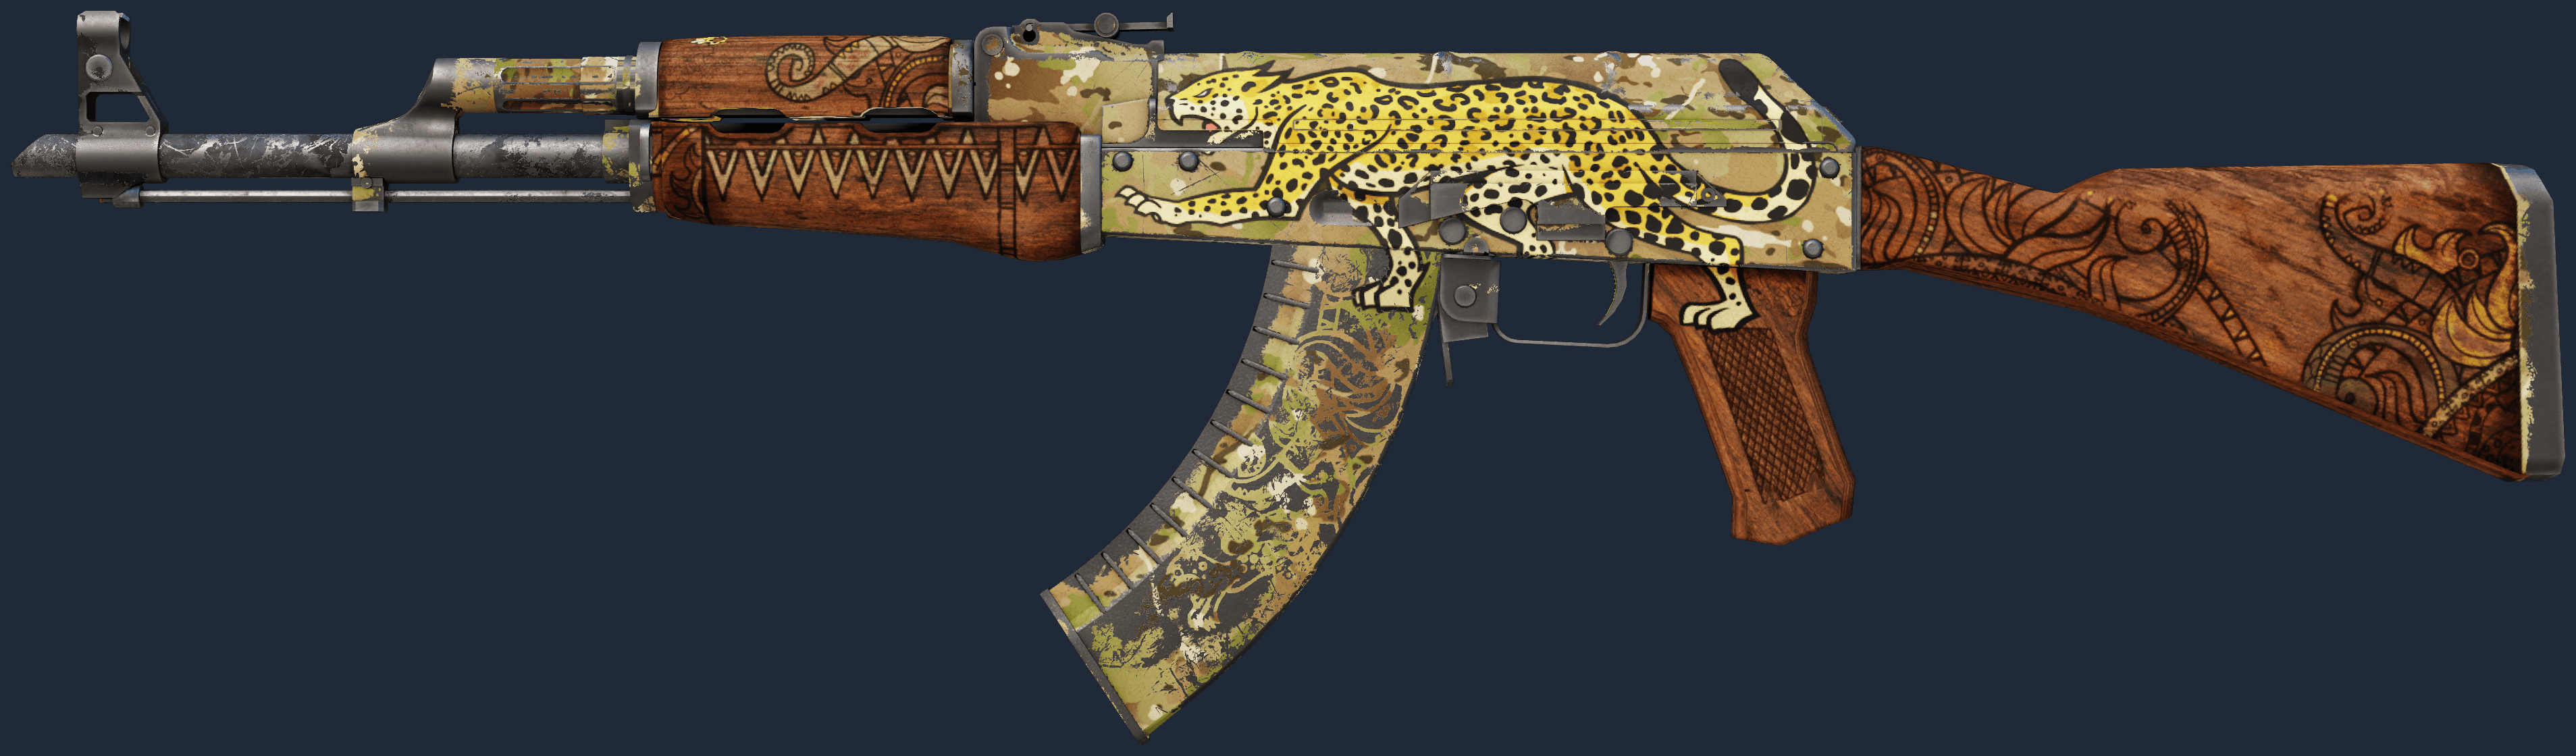 AK-47 | Panthera onca Screenshot